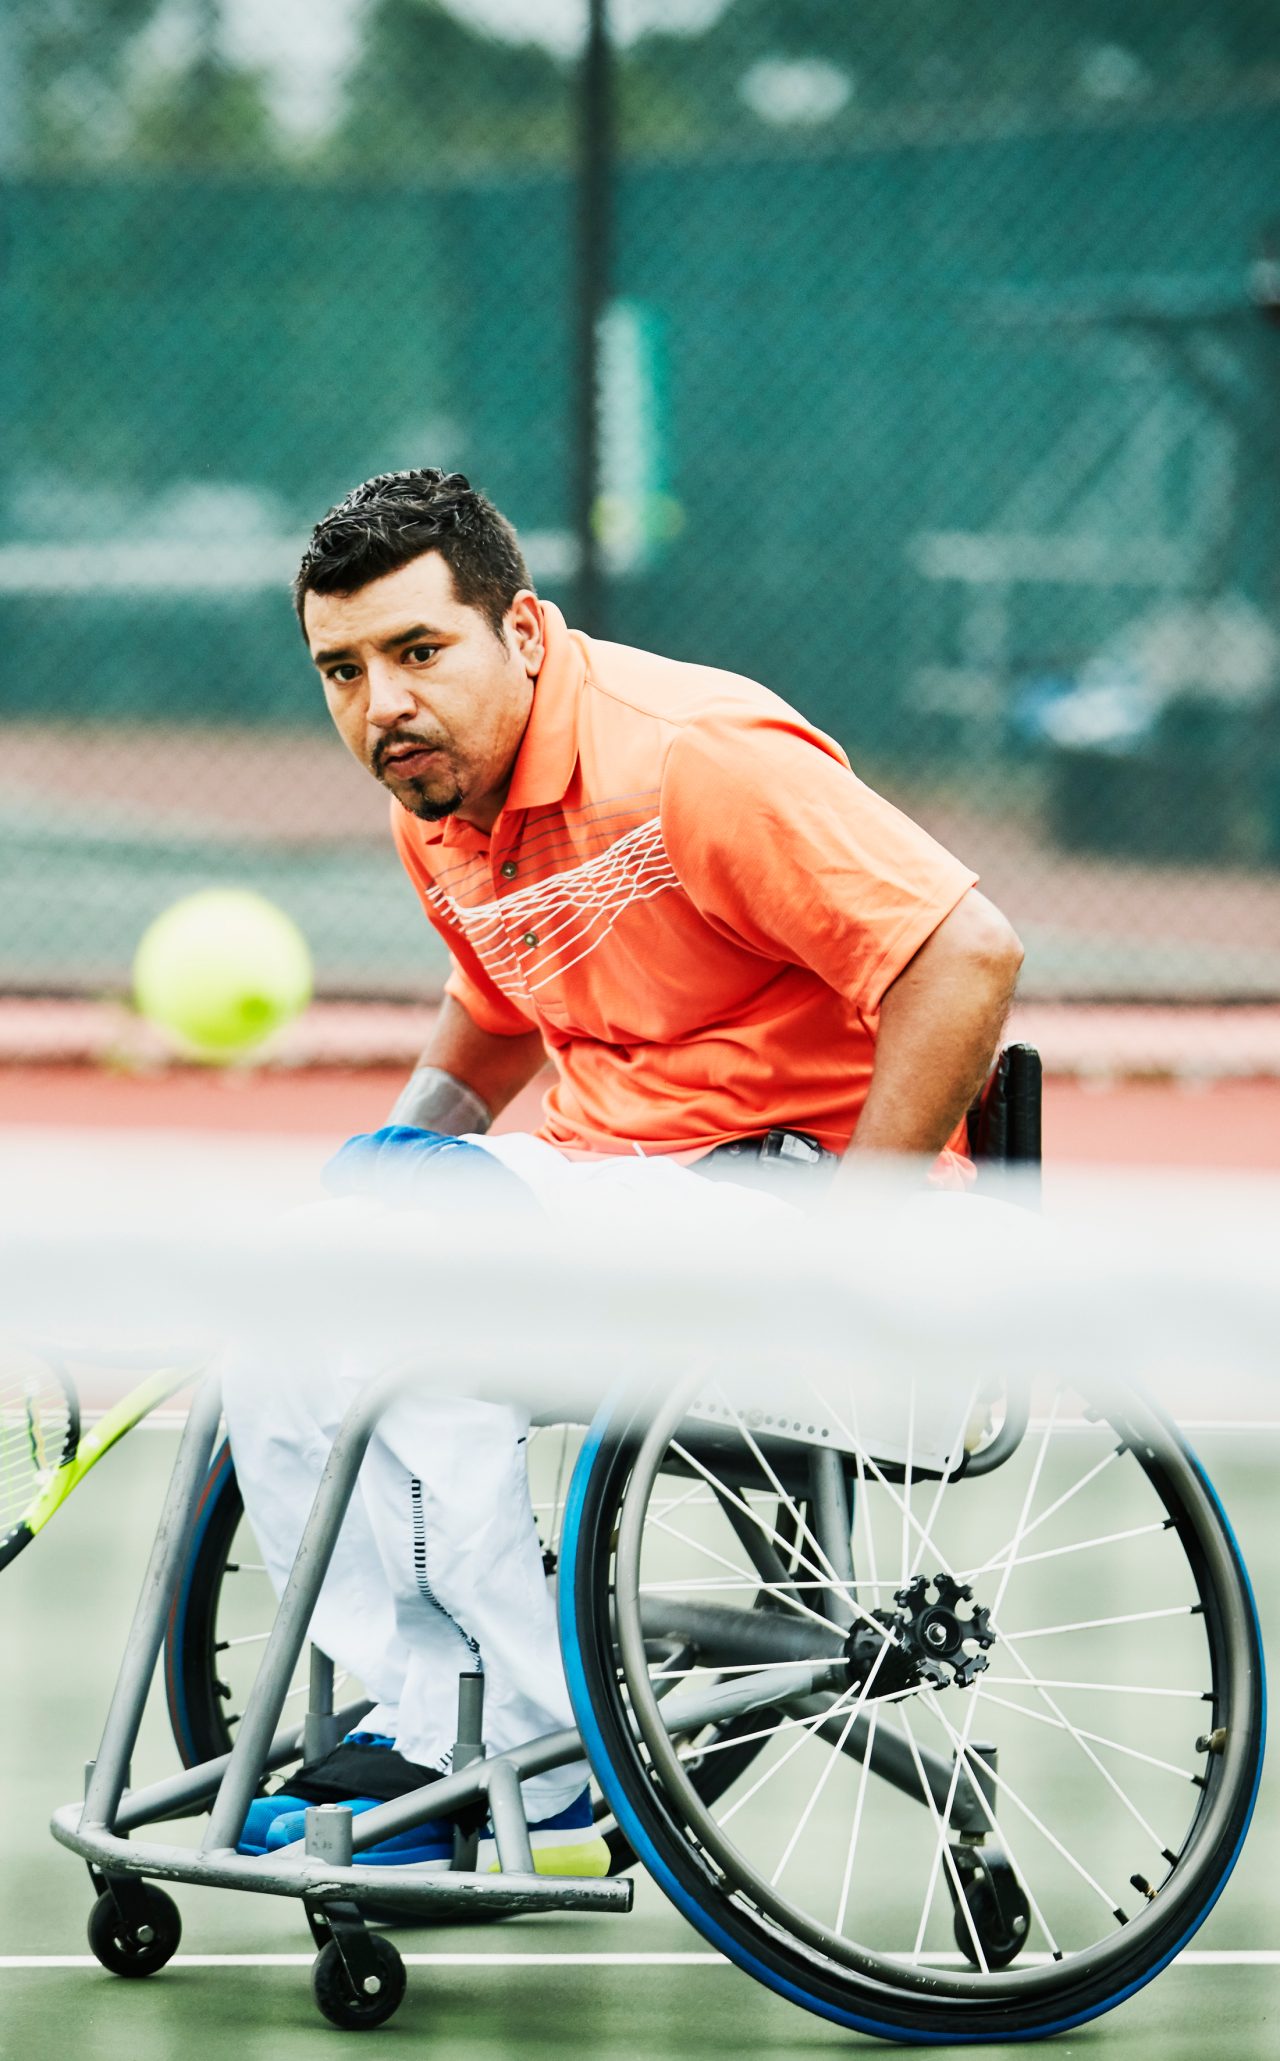 自适应运动员追逐down shot during wheelchair tennis match